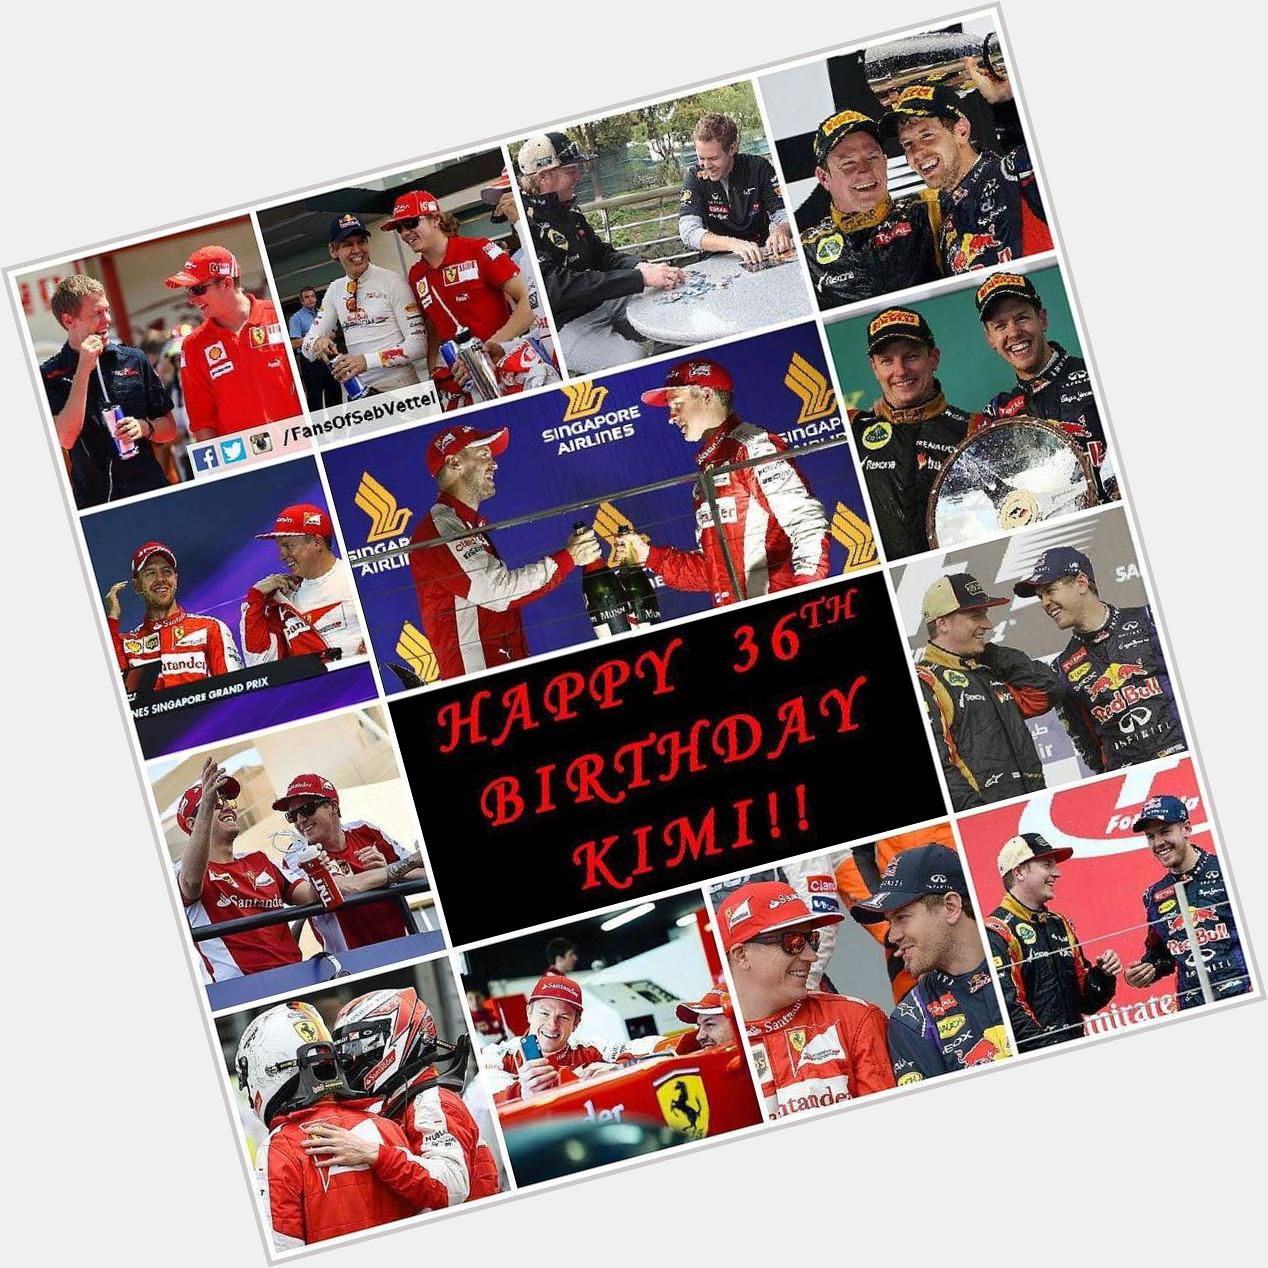 Happy Birthday to Sebastian Vettel\s friend and Ferrari team-mate Kimi Raikkonen, who turns 36 today!

Who says Kim 